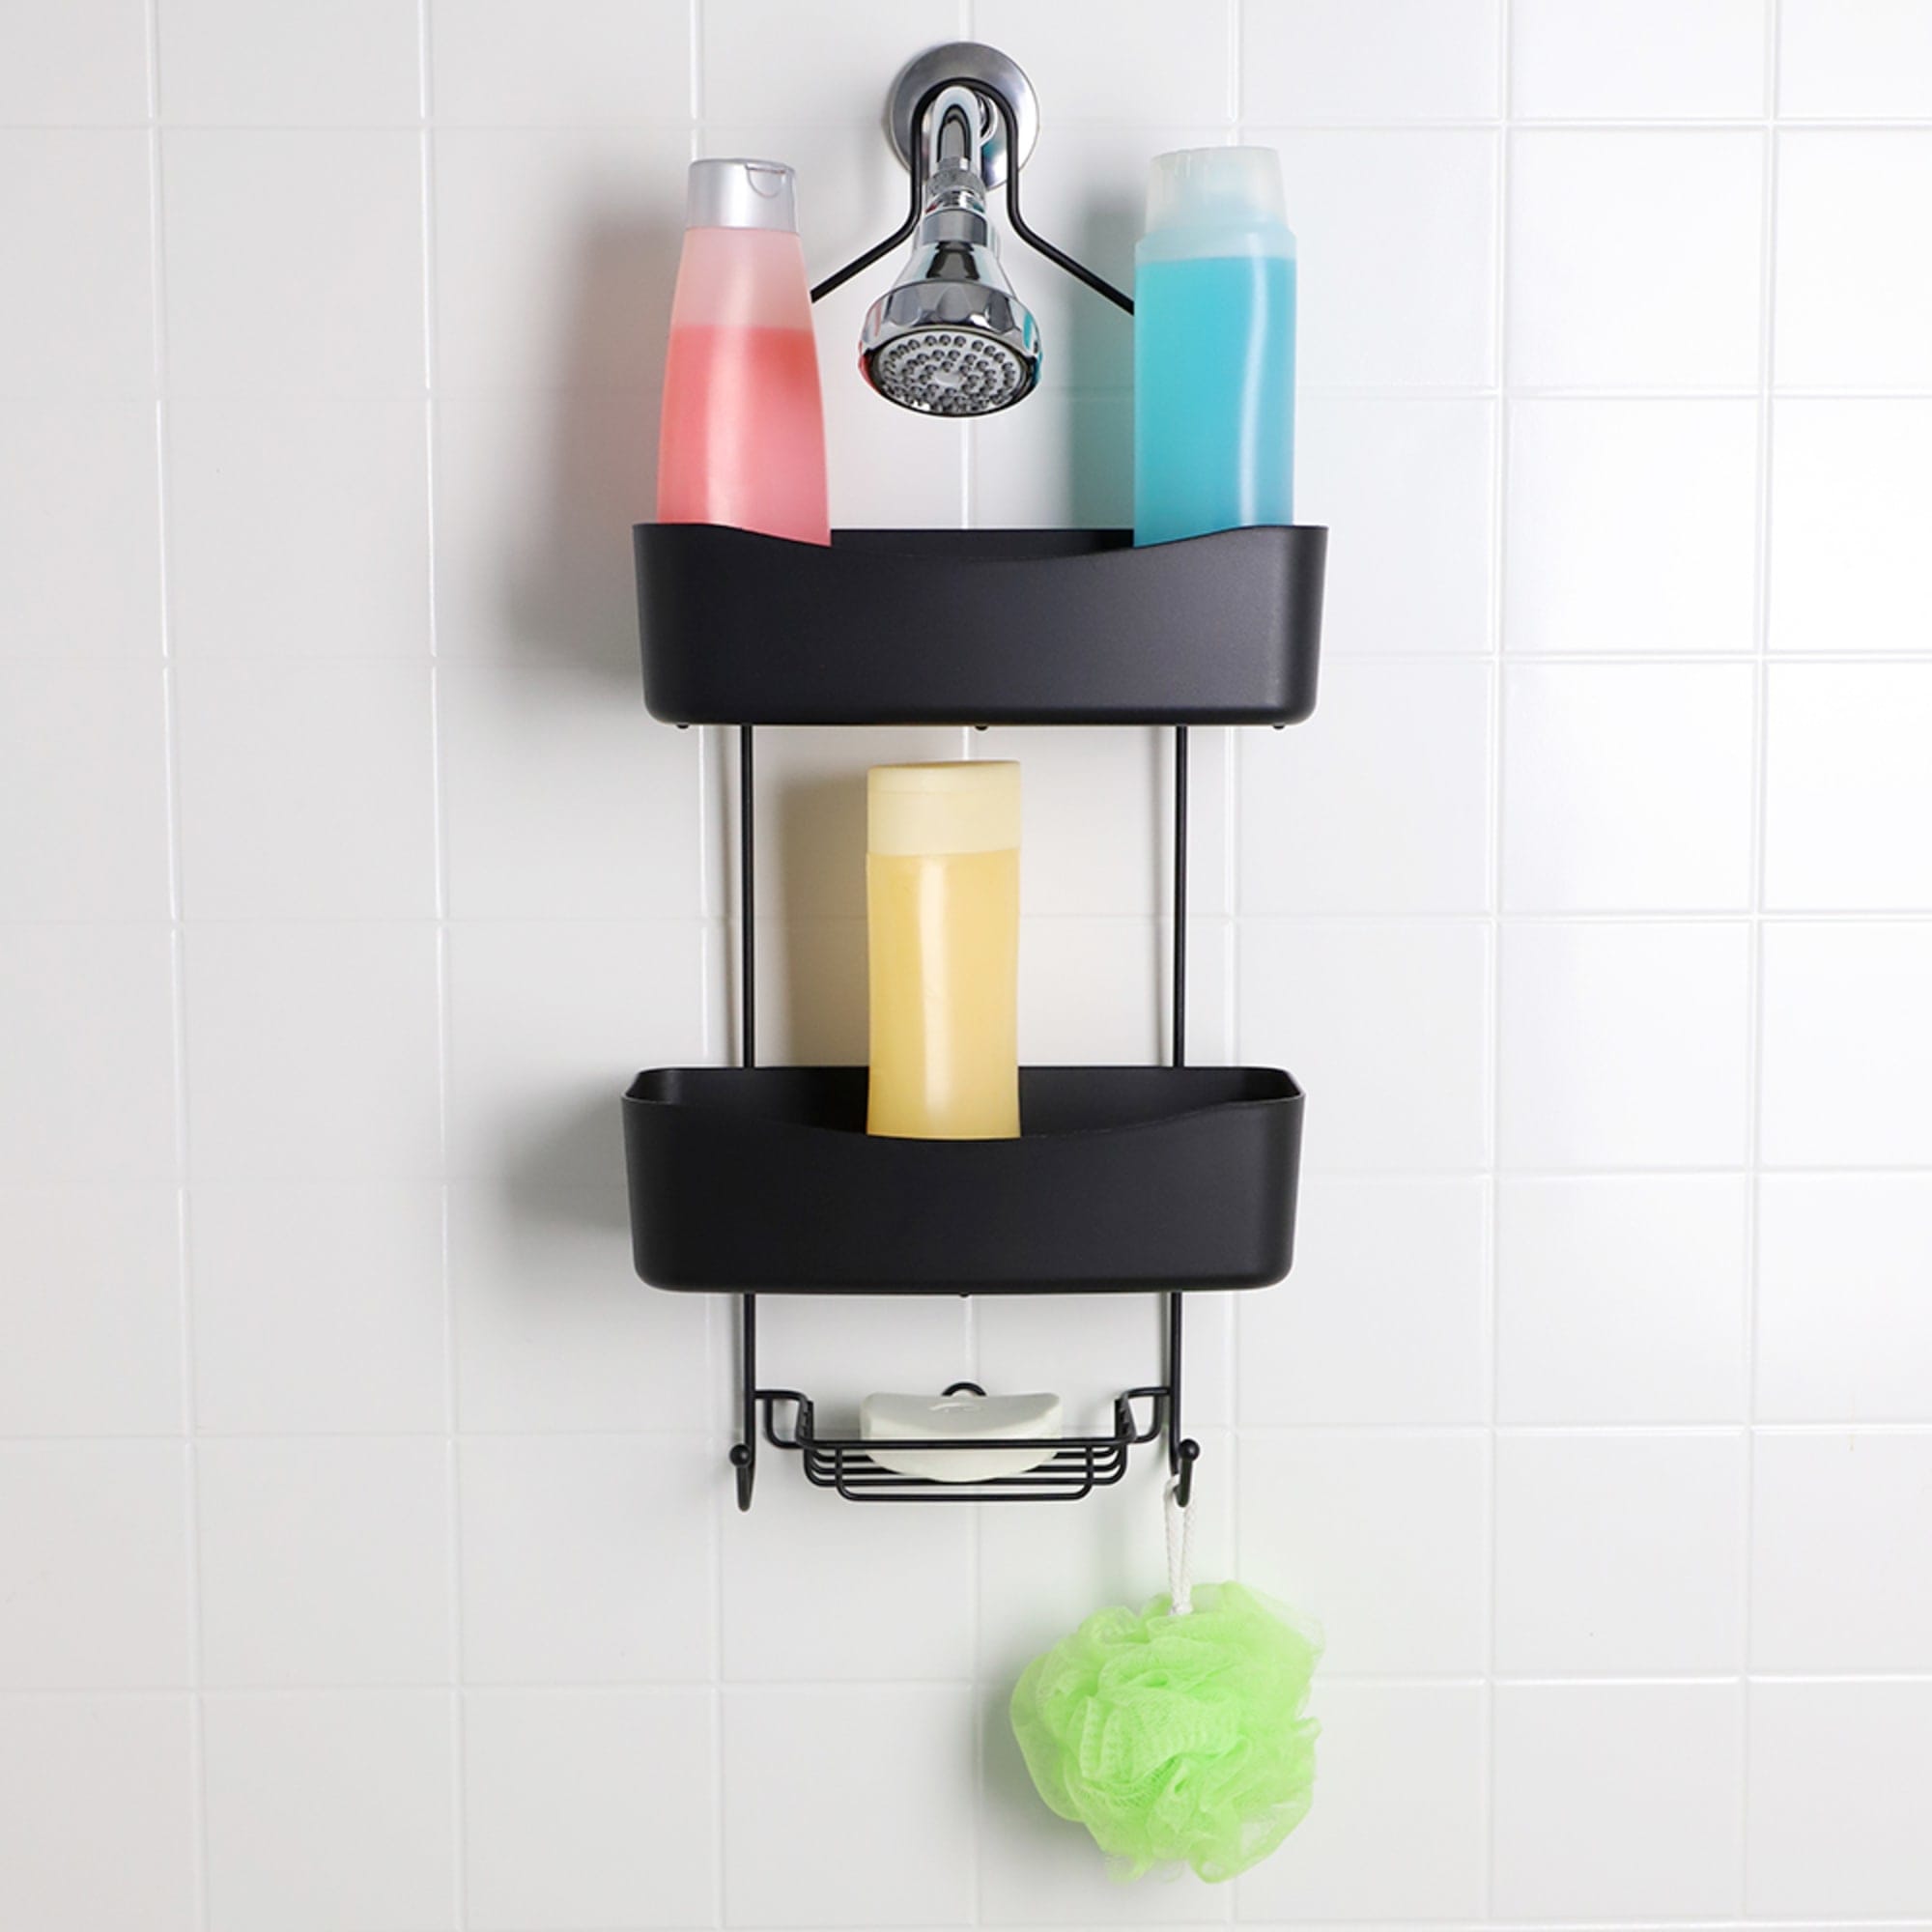 3 Tier Hanging Shower Caddy Over Shower Head w/ Hooks & Soap Baskets  Bathroom